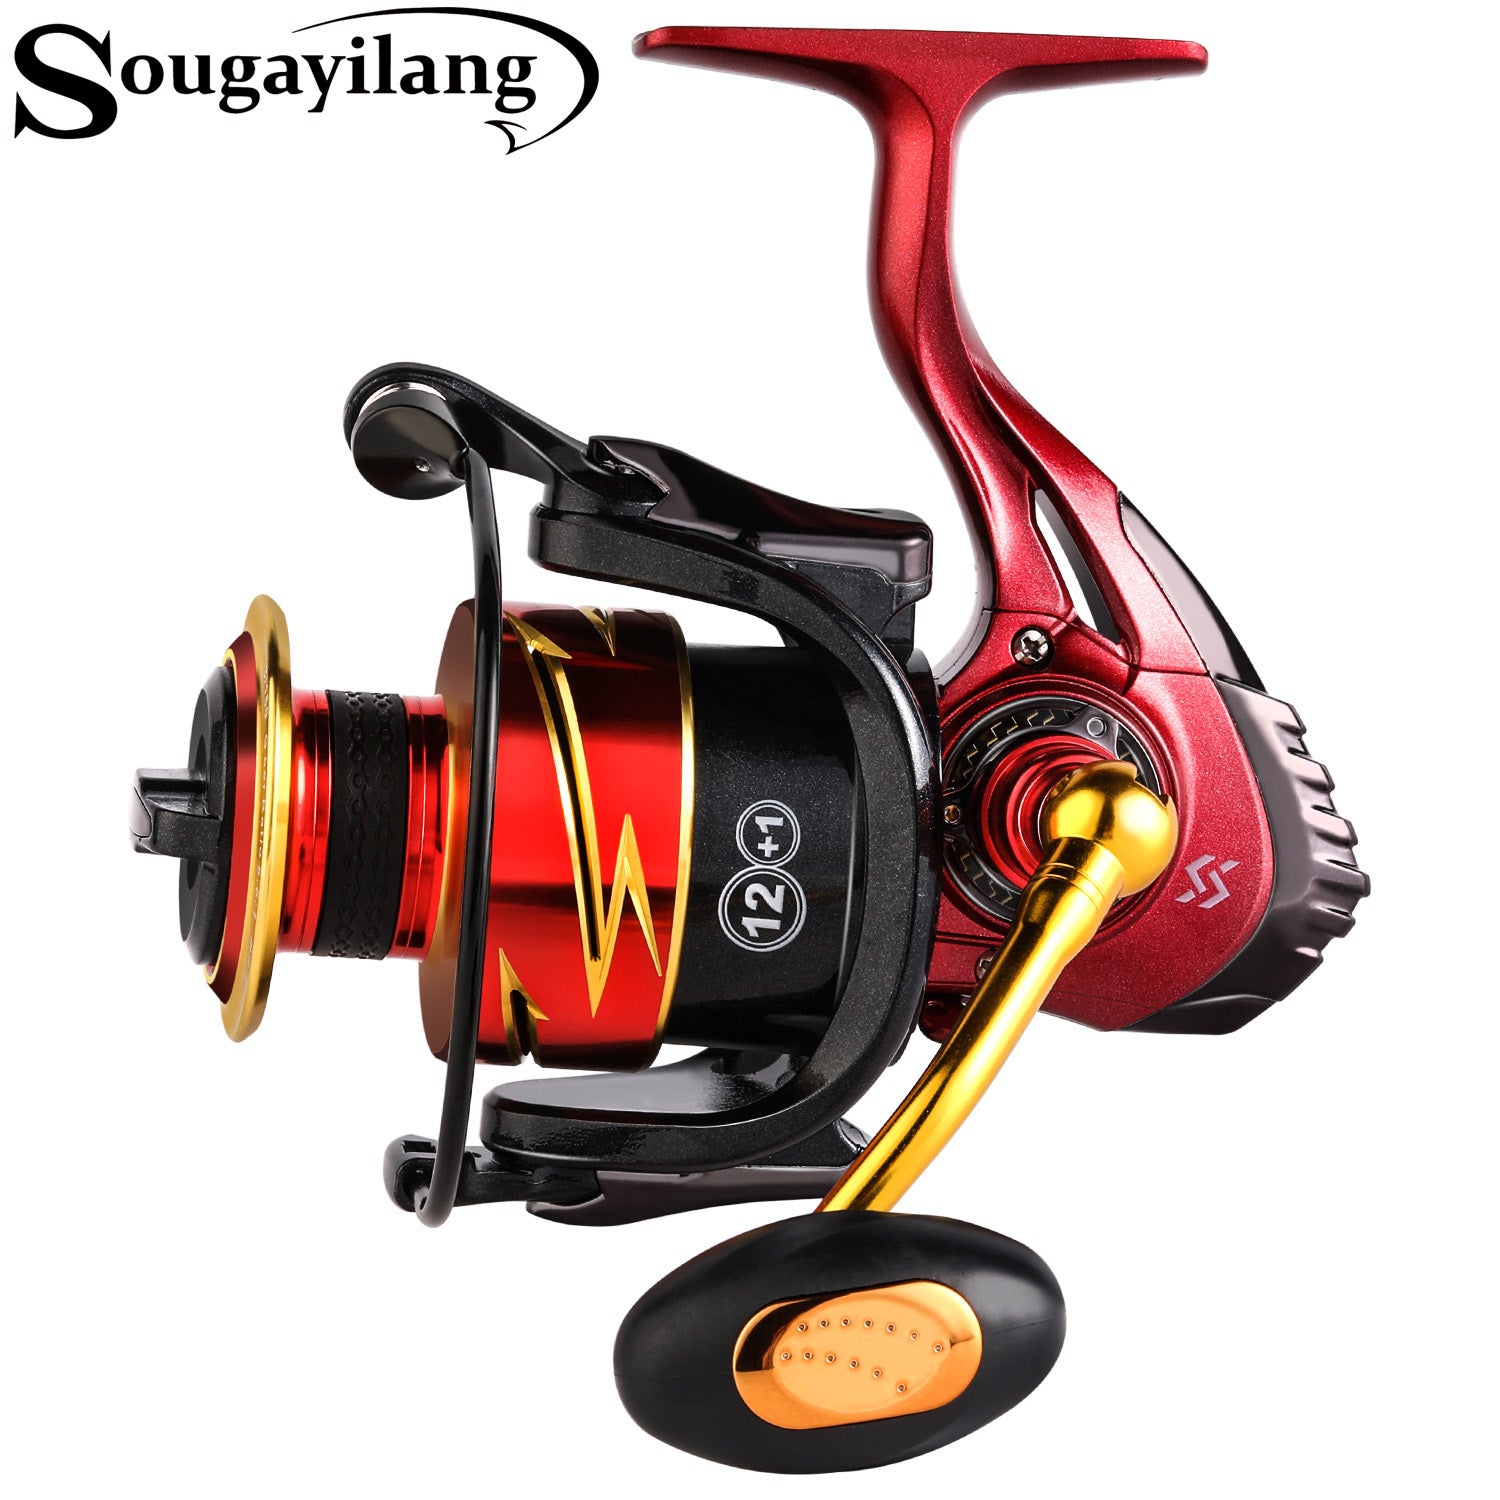 Sougayilang 1000-5000 Spinning Fishing Reel 9+1 Bearing Ball, Metal Fishing  Reel, CNC Aluminum Spool And Power Handle For Saltwater Or Freshwater